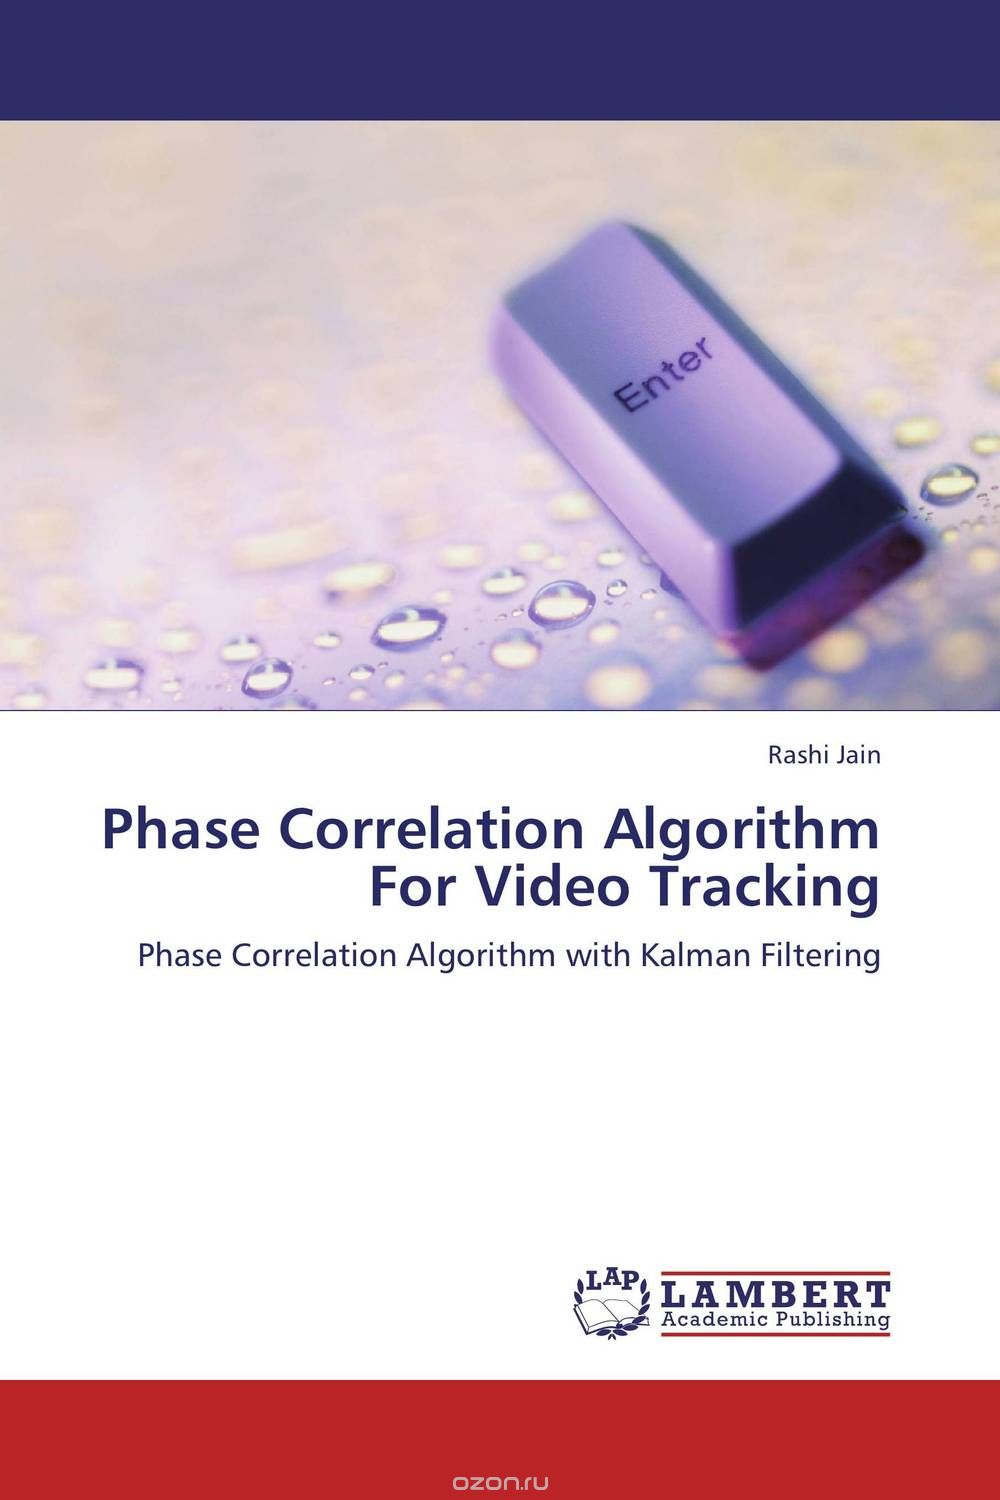 Скачать книгу "Phase Correlation Algorithm For Video Tracking"